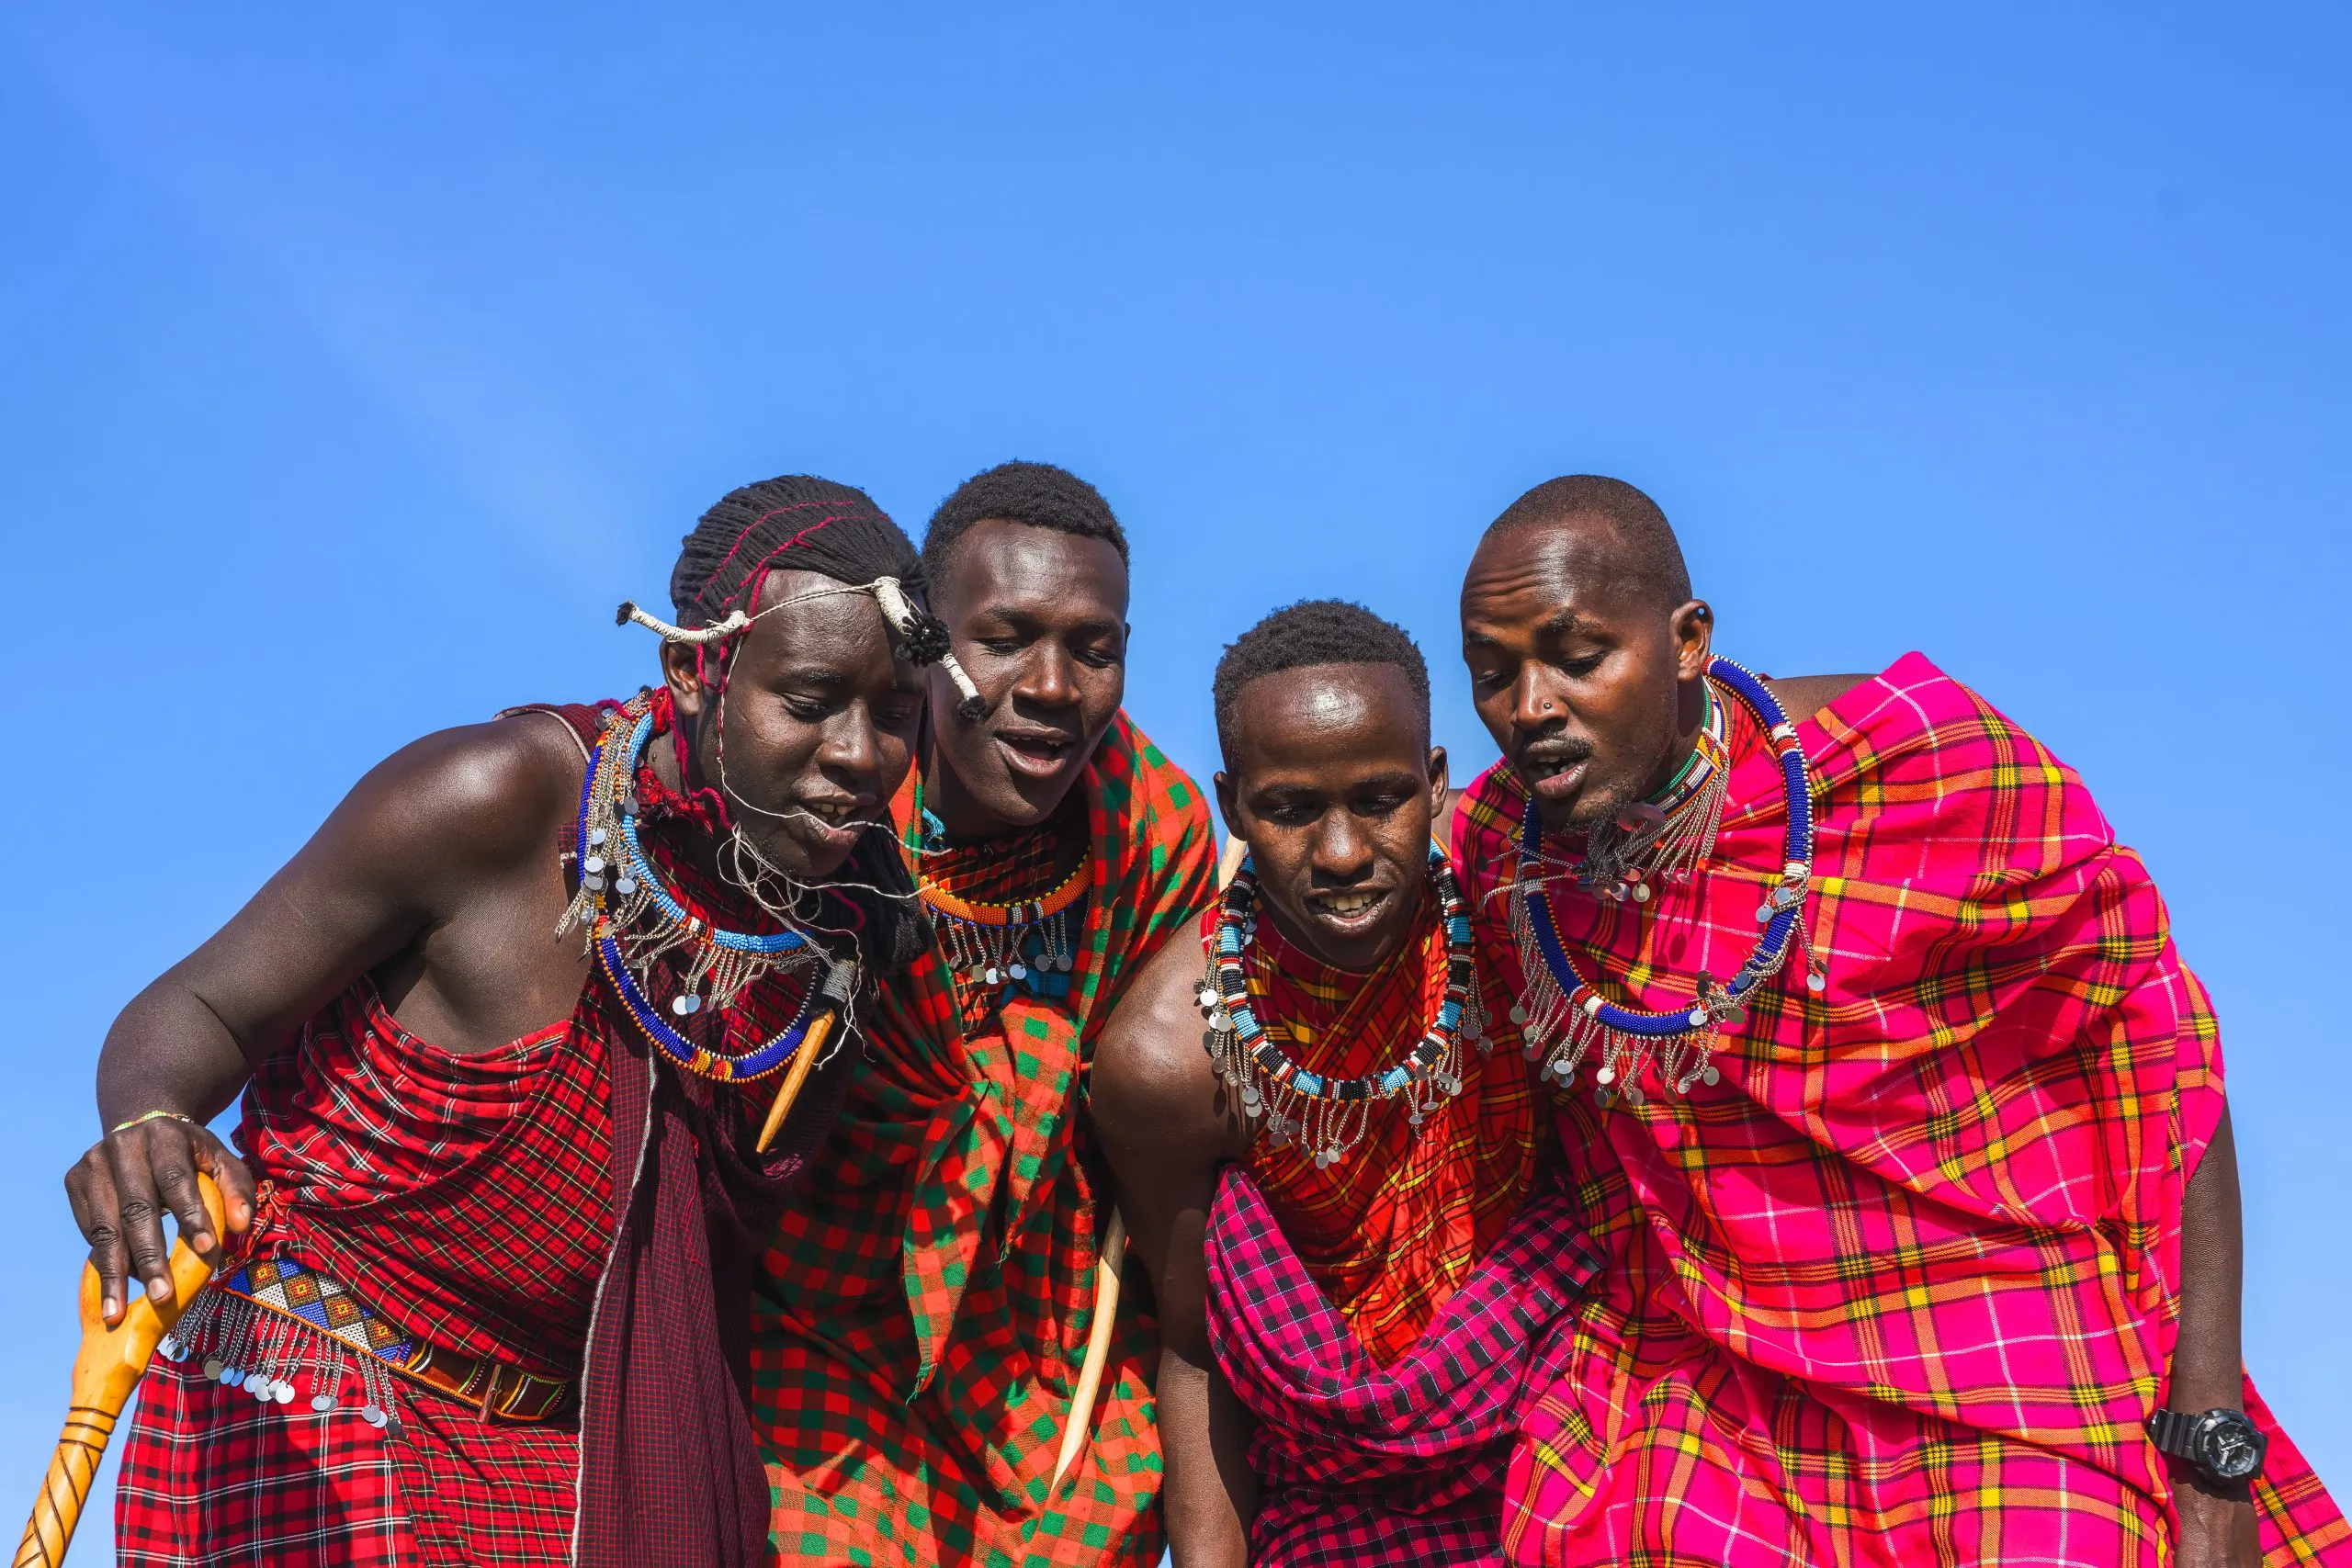 Homme Maasai Mara montrant la danse traditionnelle de saut Maasai